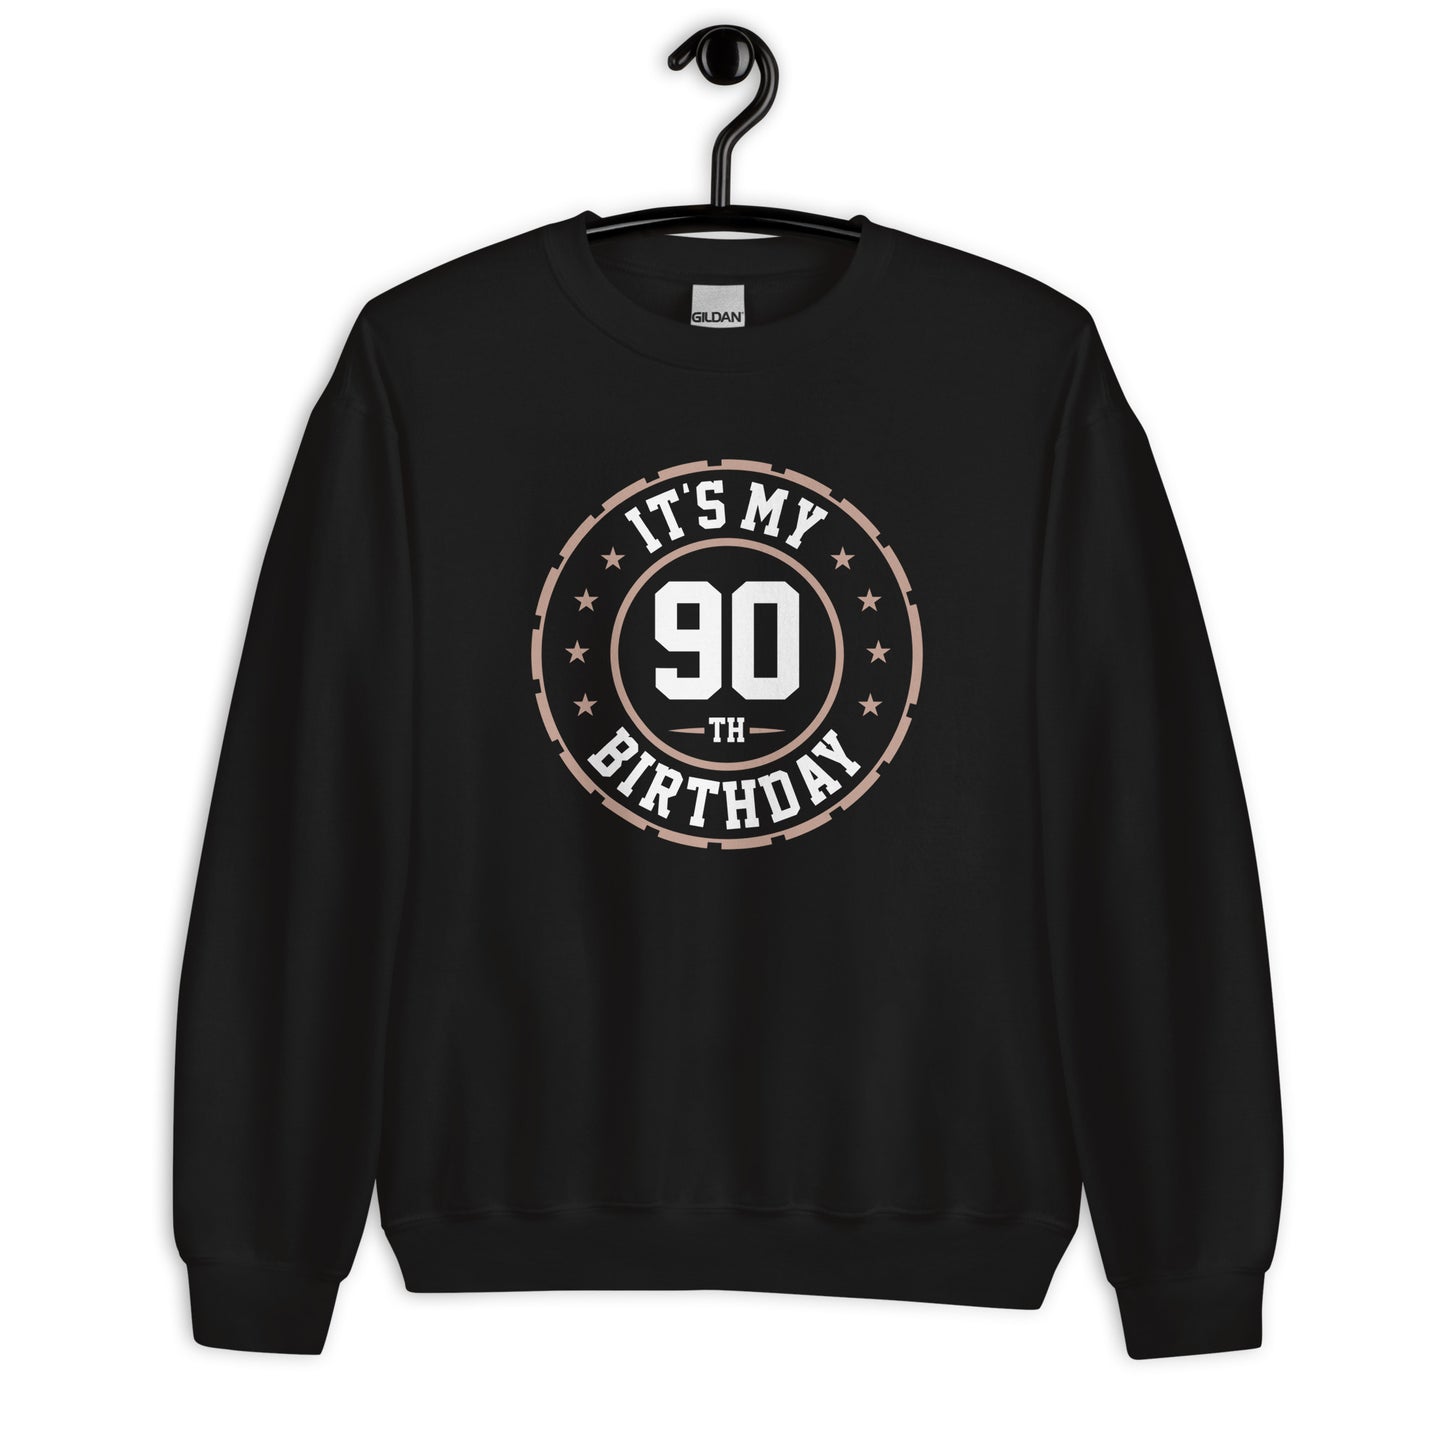 90th Birthday Sweatshirt, 90 Years Graphic Crewneck Fleece Cotton Sweater Jumper Pullover Men Women Adult Aesthetic Top Starcove Fashion